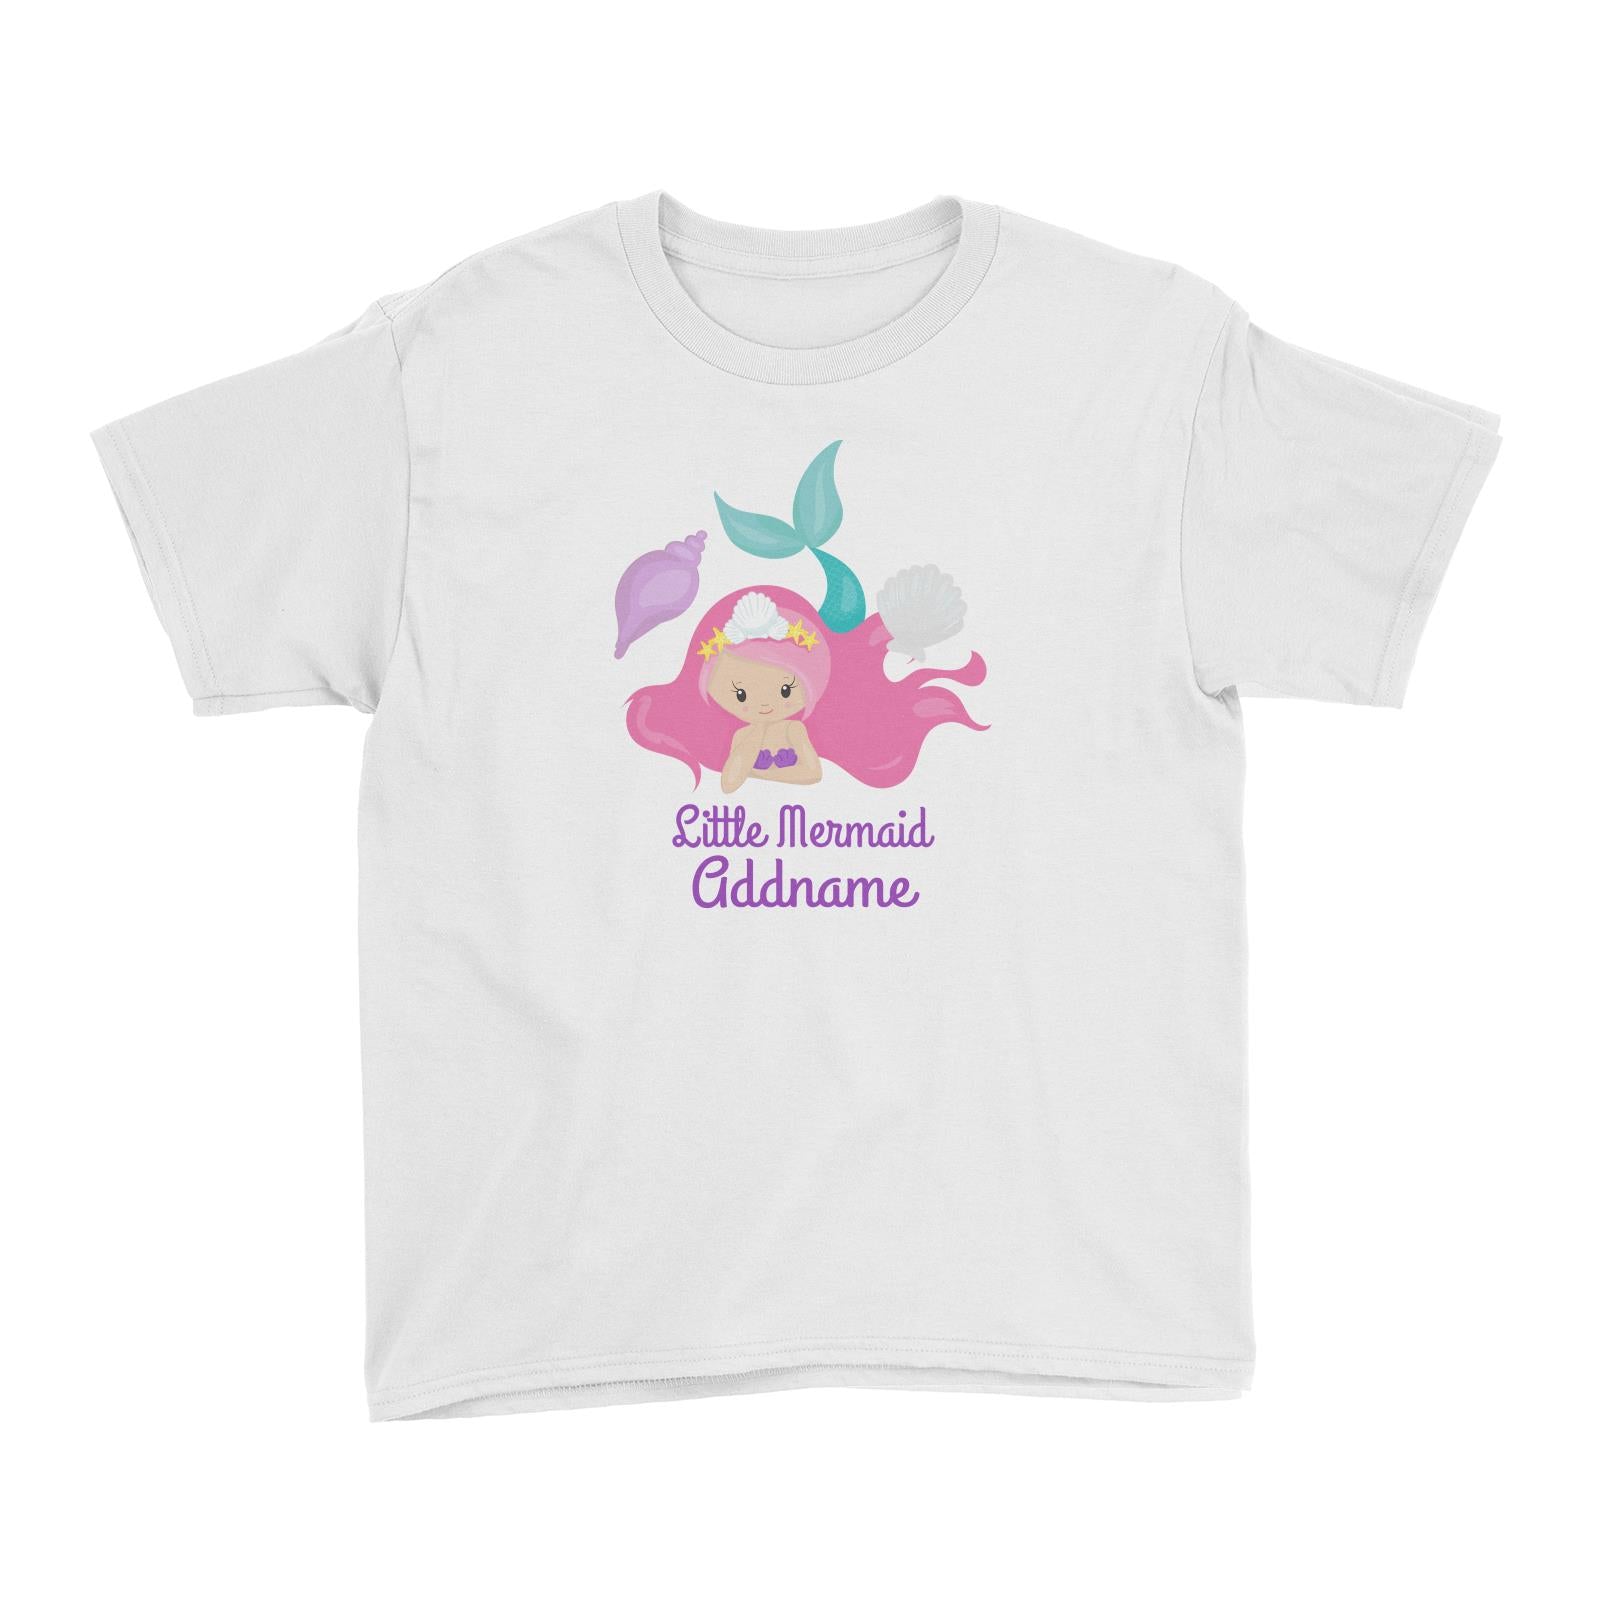 Little Mermaid Lying Down with Seashells Addname Kid's T-Shirt